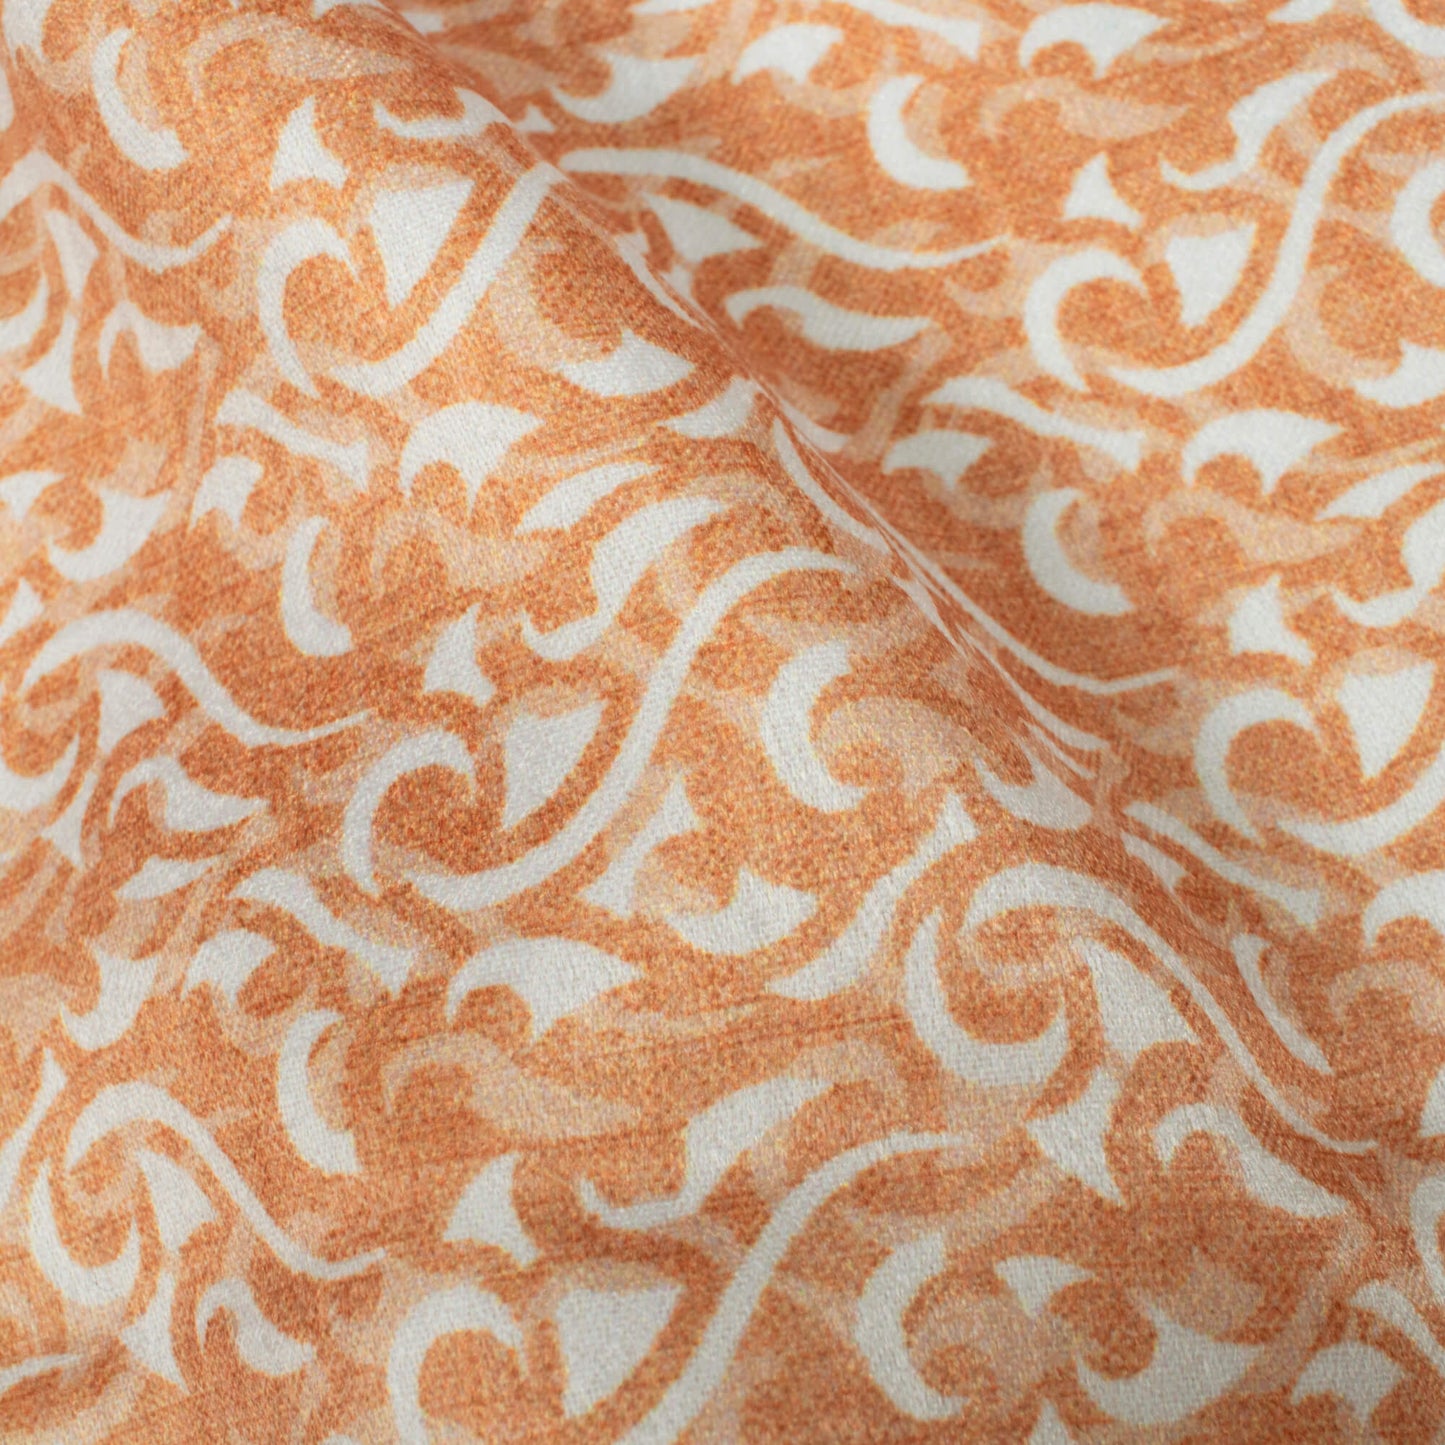 Melon Orange And White Abstract Pattern Digital Print Lush Satin Fabric